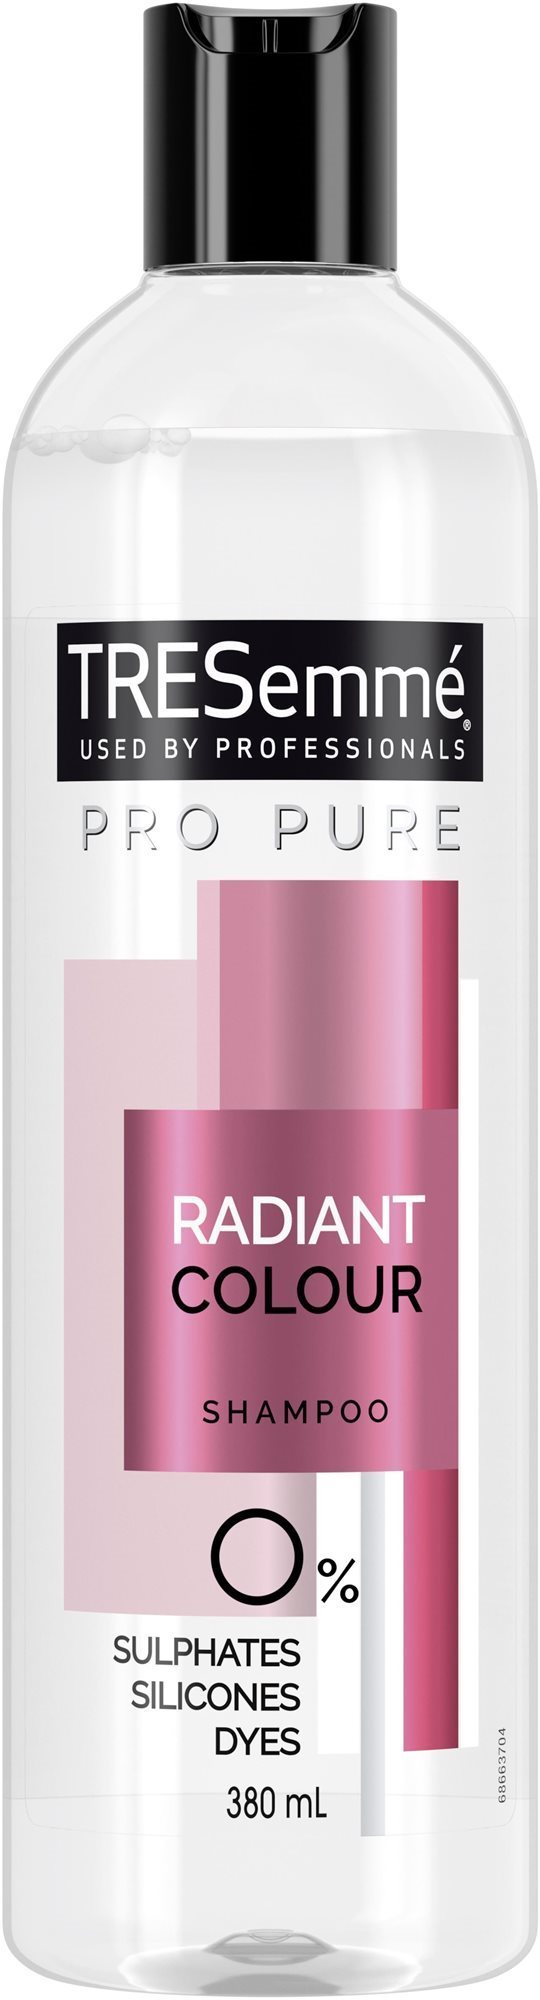 TRESEMMÉ Pro Pure Pure Radiant Colour sampon festett hajra 380 ml